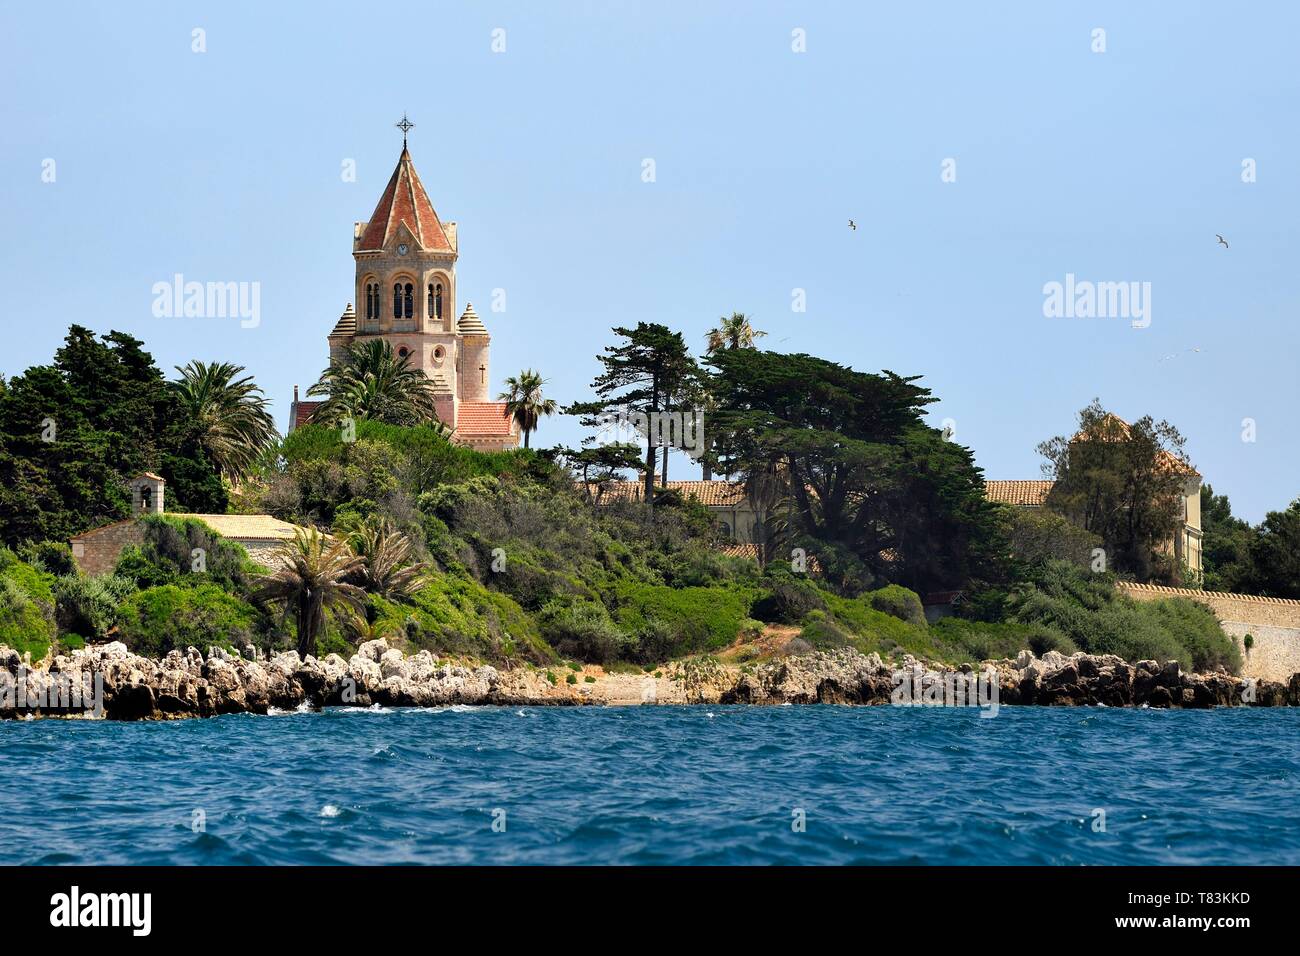 France, Alpes Maritimes, Lerins Islands, Saint Honorat island, Abbey of Lerins, the abbey church Stock Photo